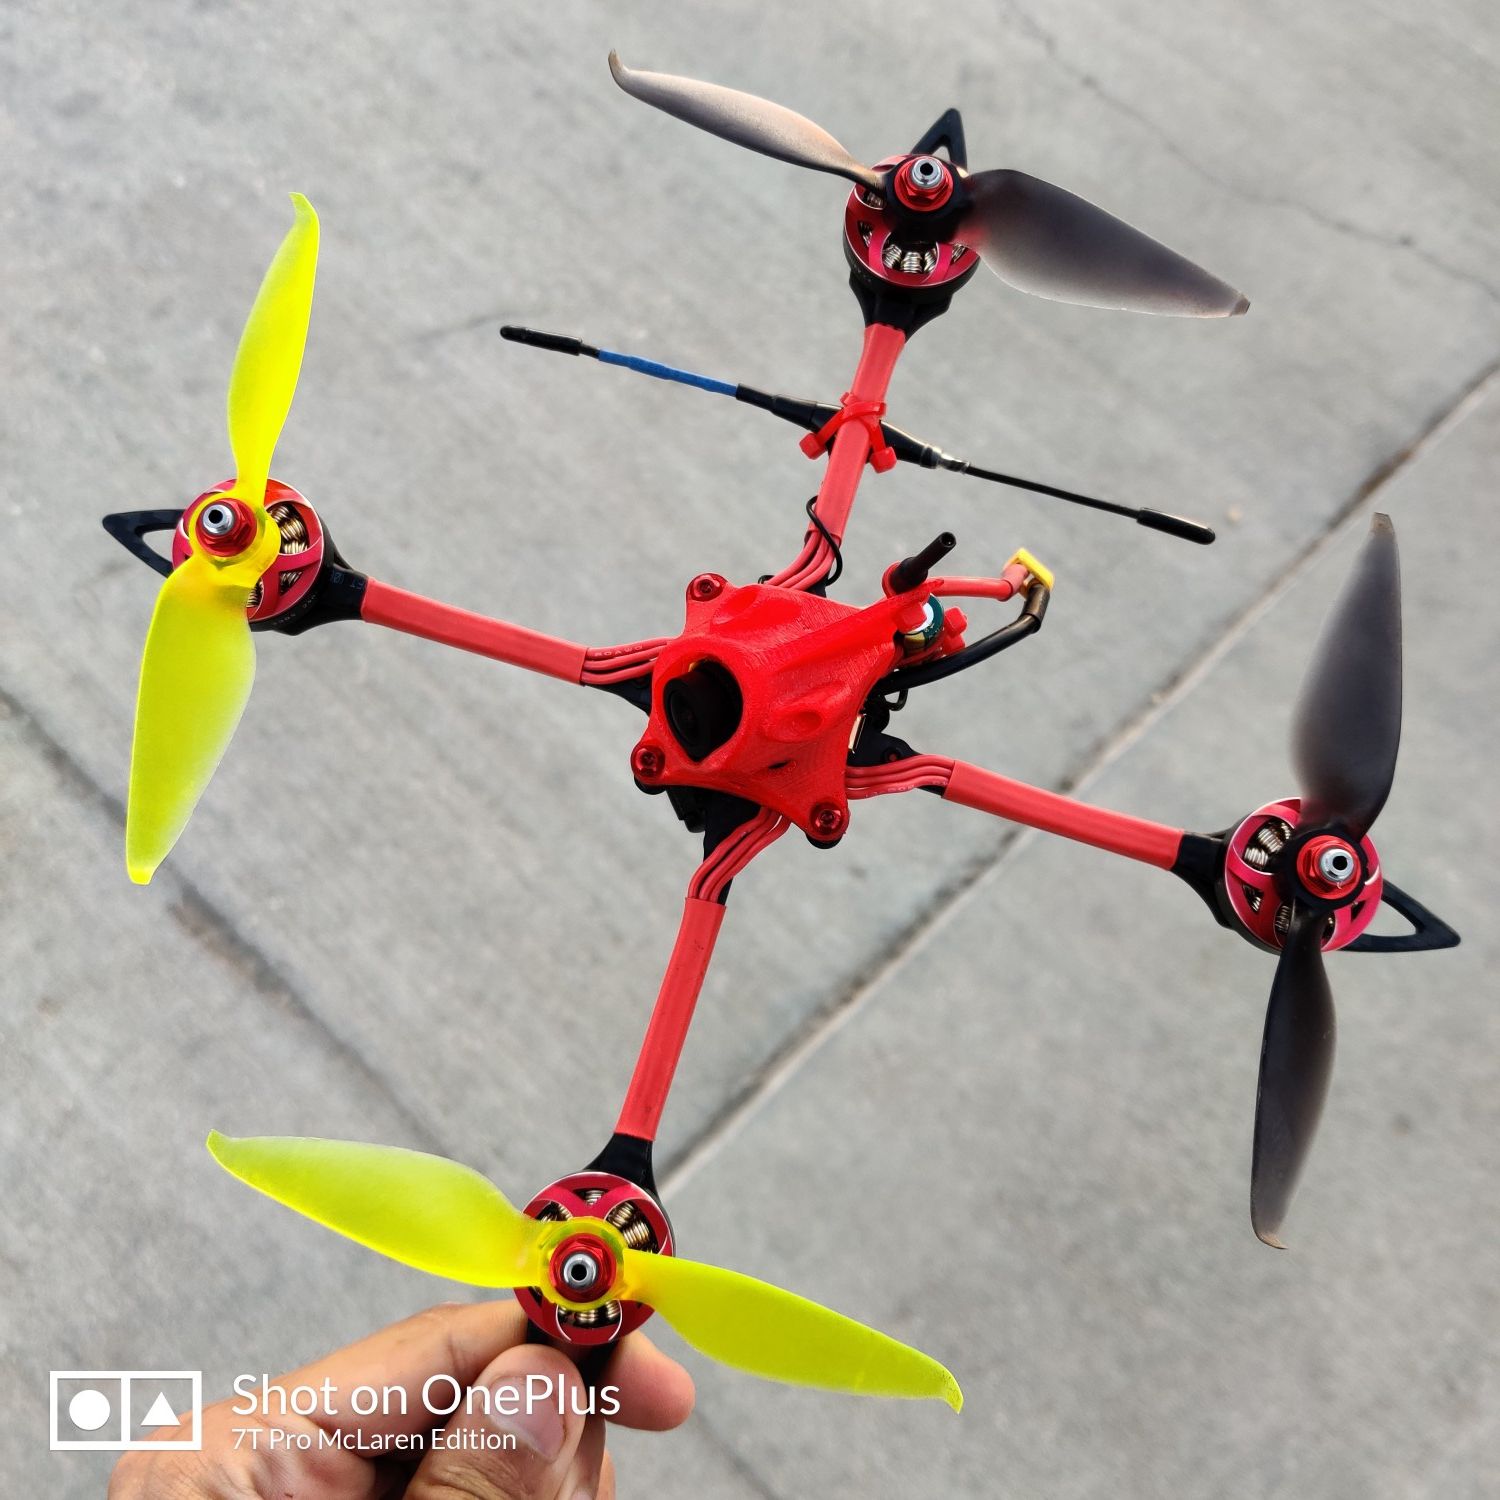 5"2305 X-Knight Ultralite fpv drone